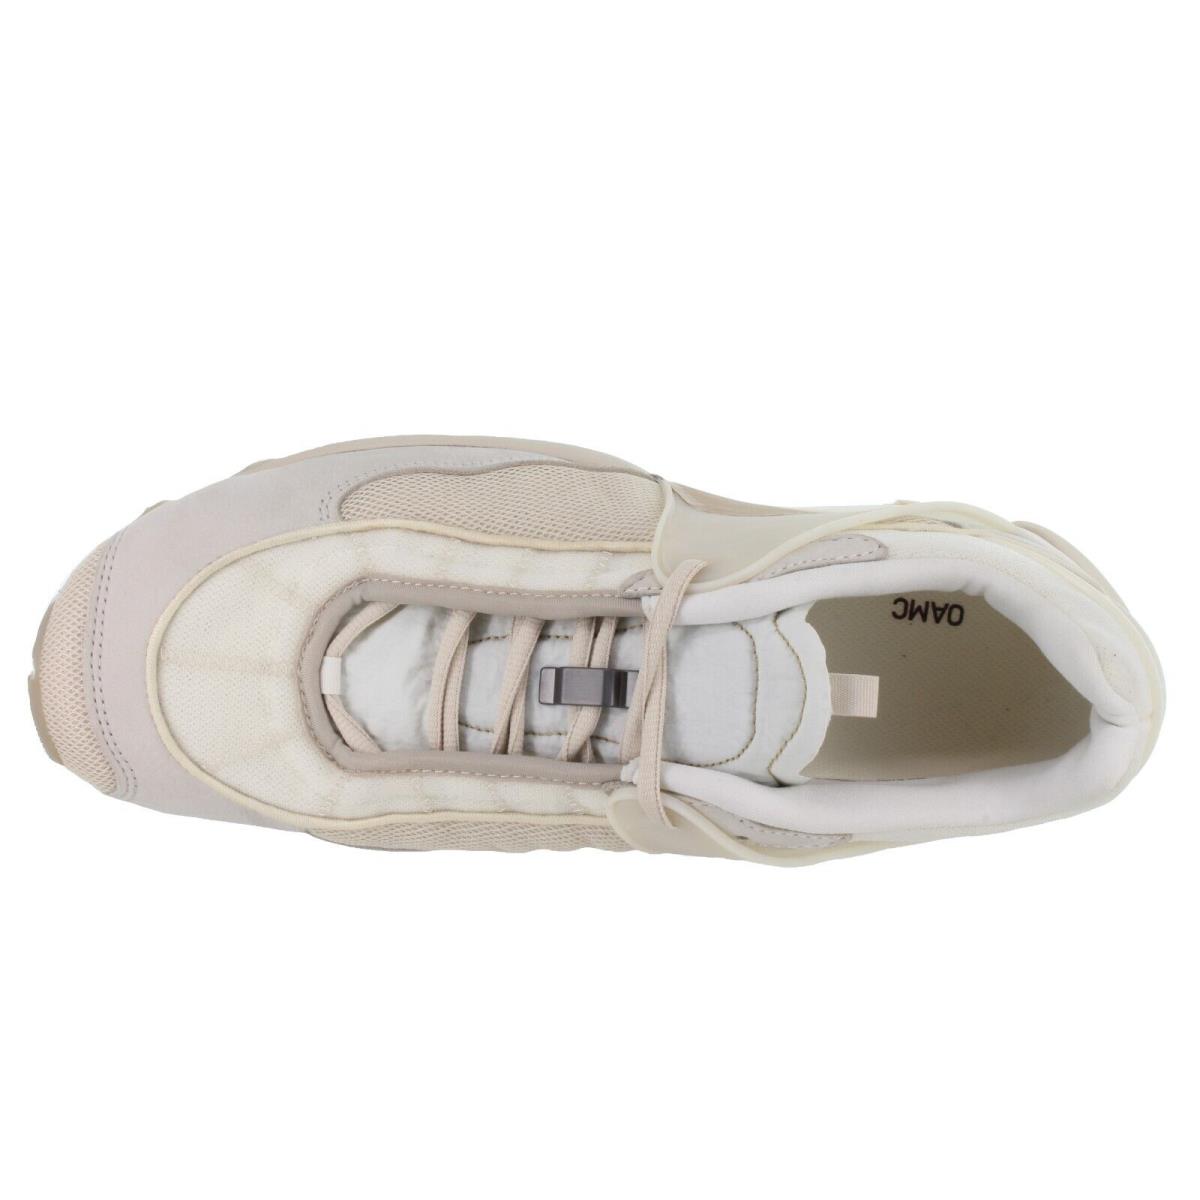 Adidas shoes  - Off White, Tan, Supplier Colour 3